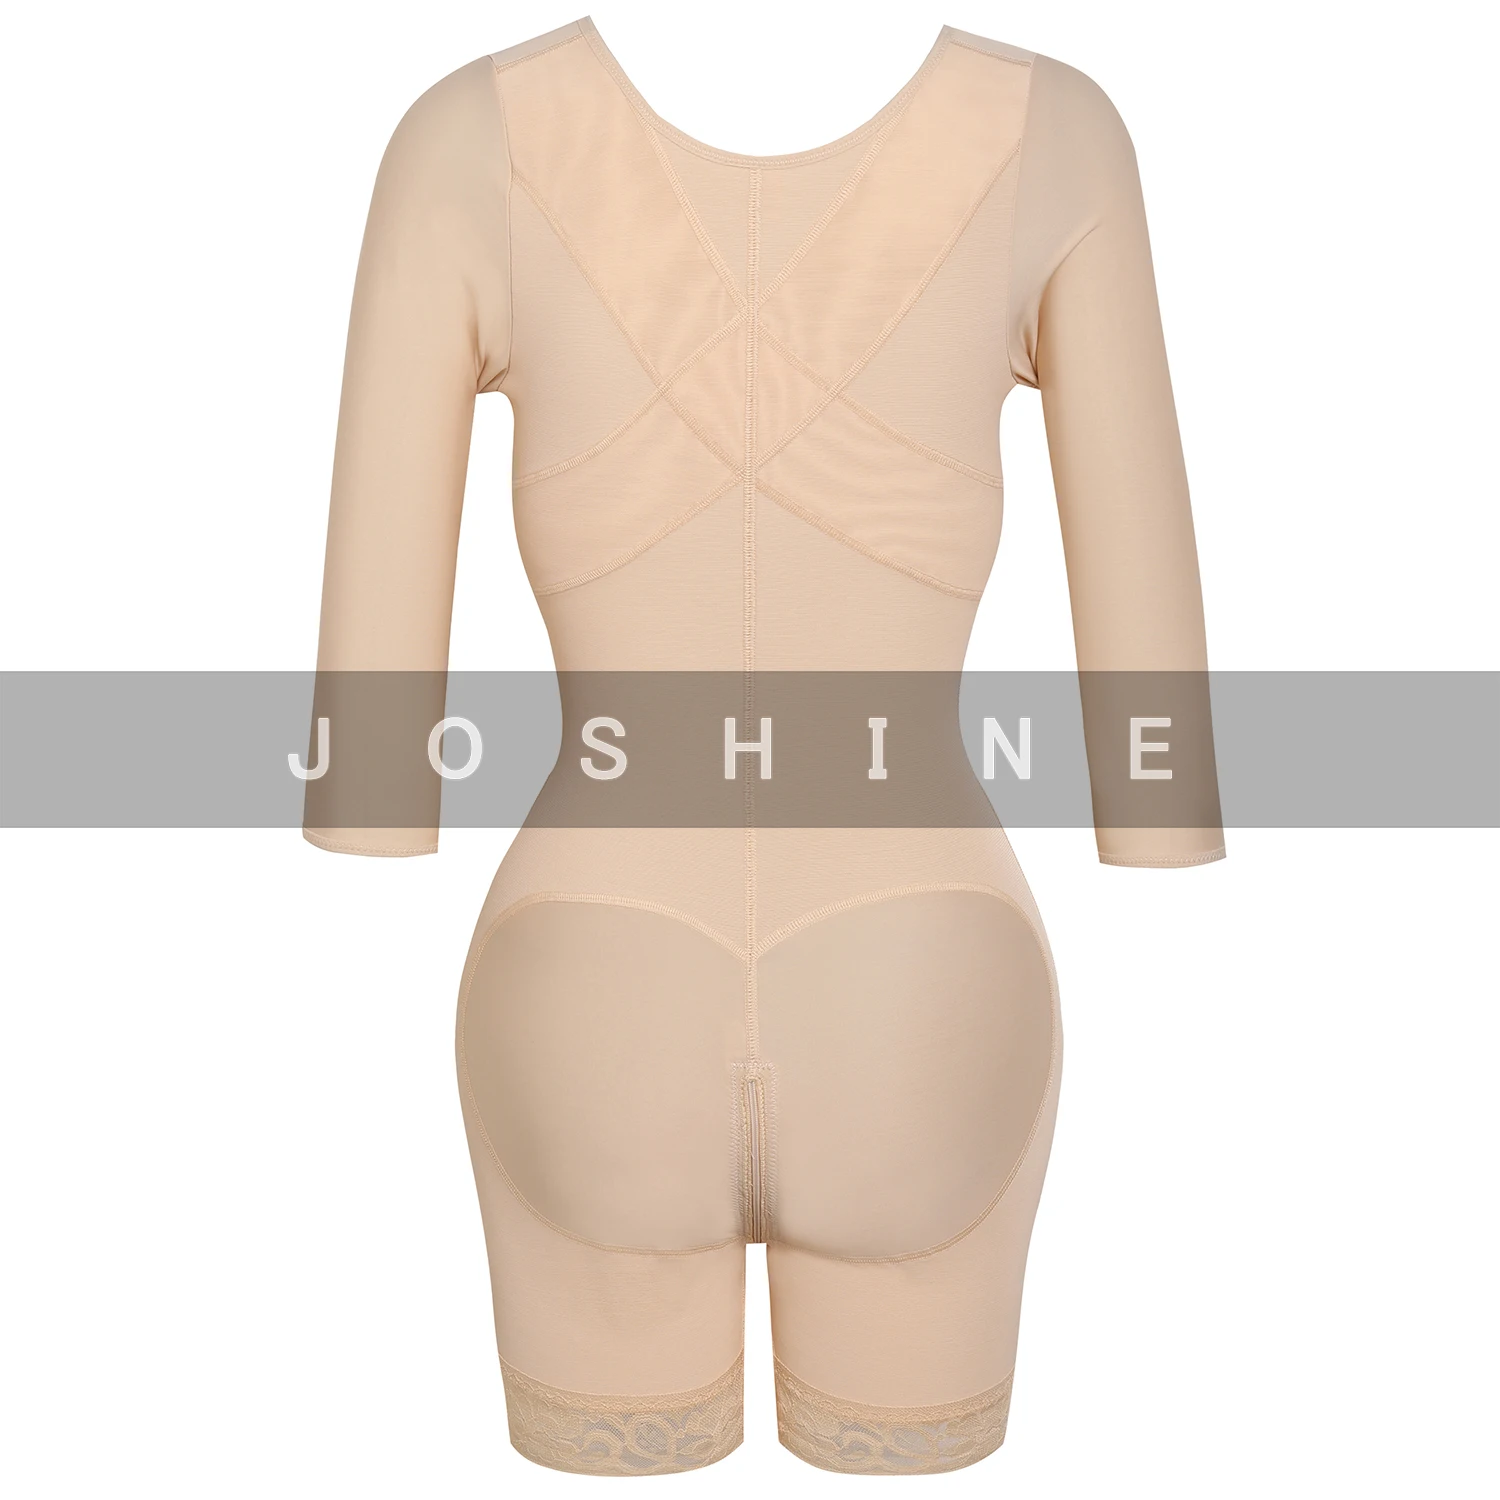 JOSHINE Best Shapewear For Tummy And Waist 